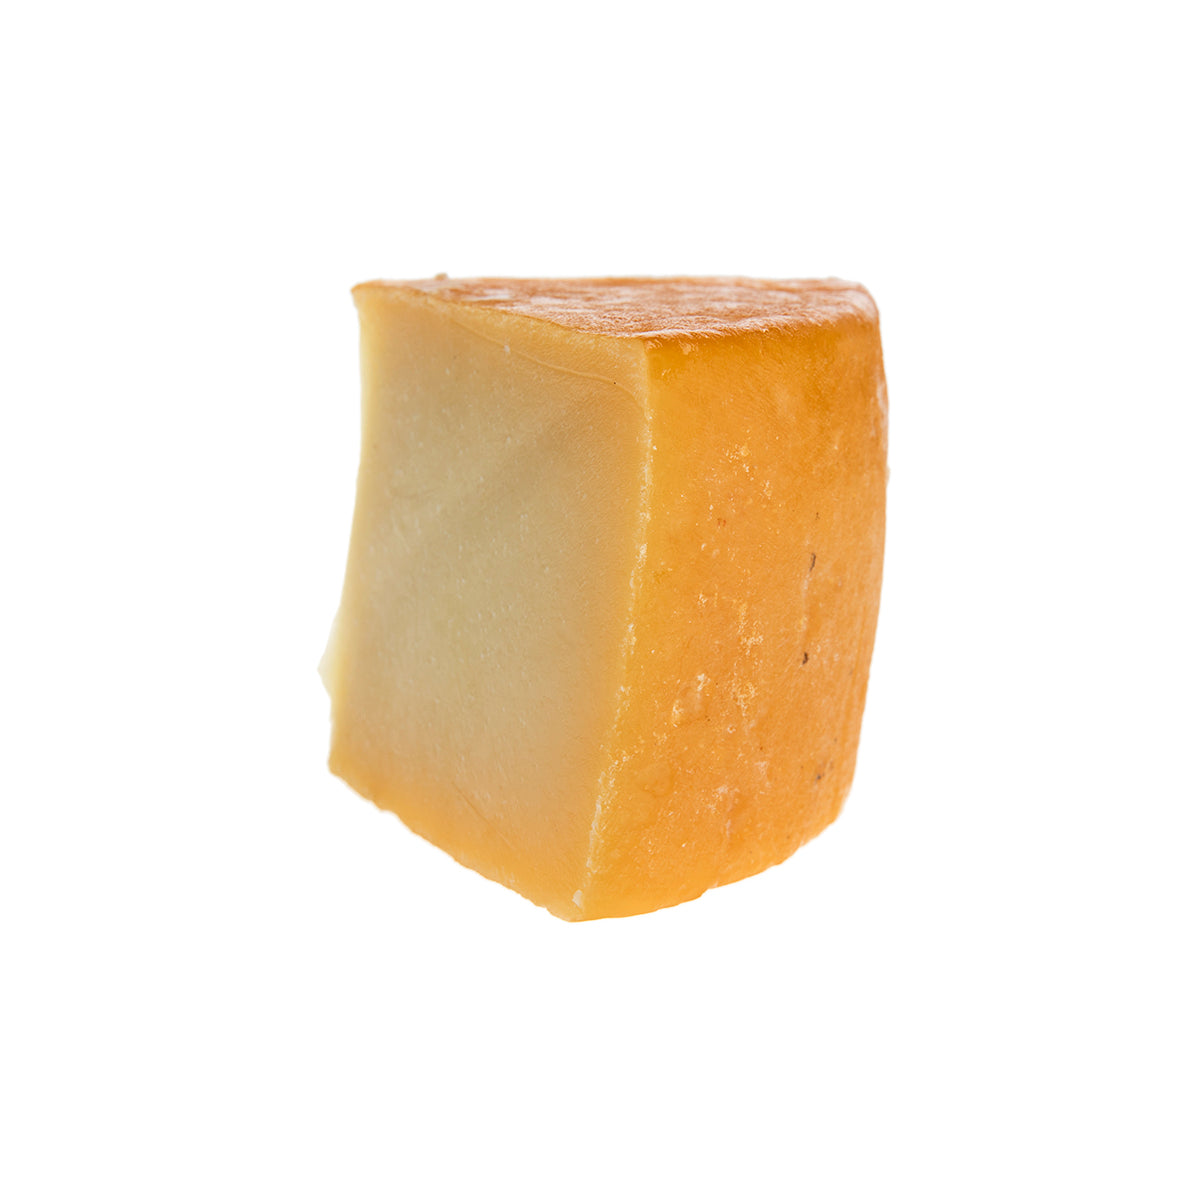 Murray'S Cheese Idiazábal Cheese